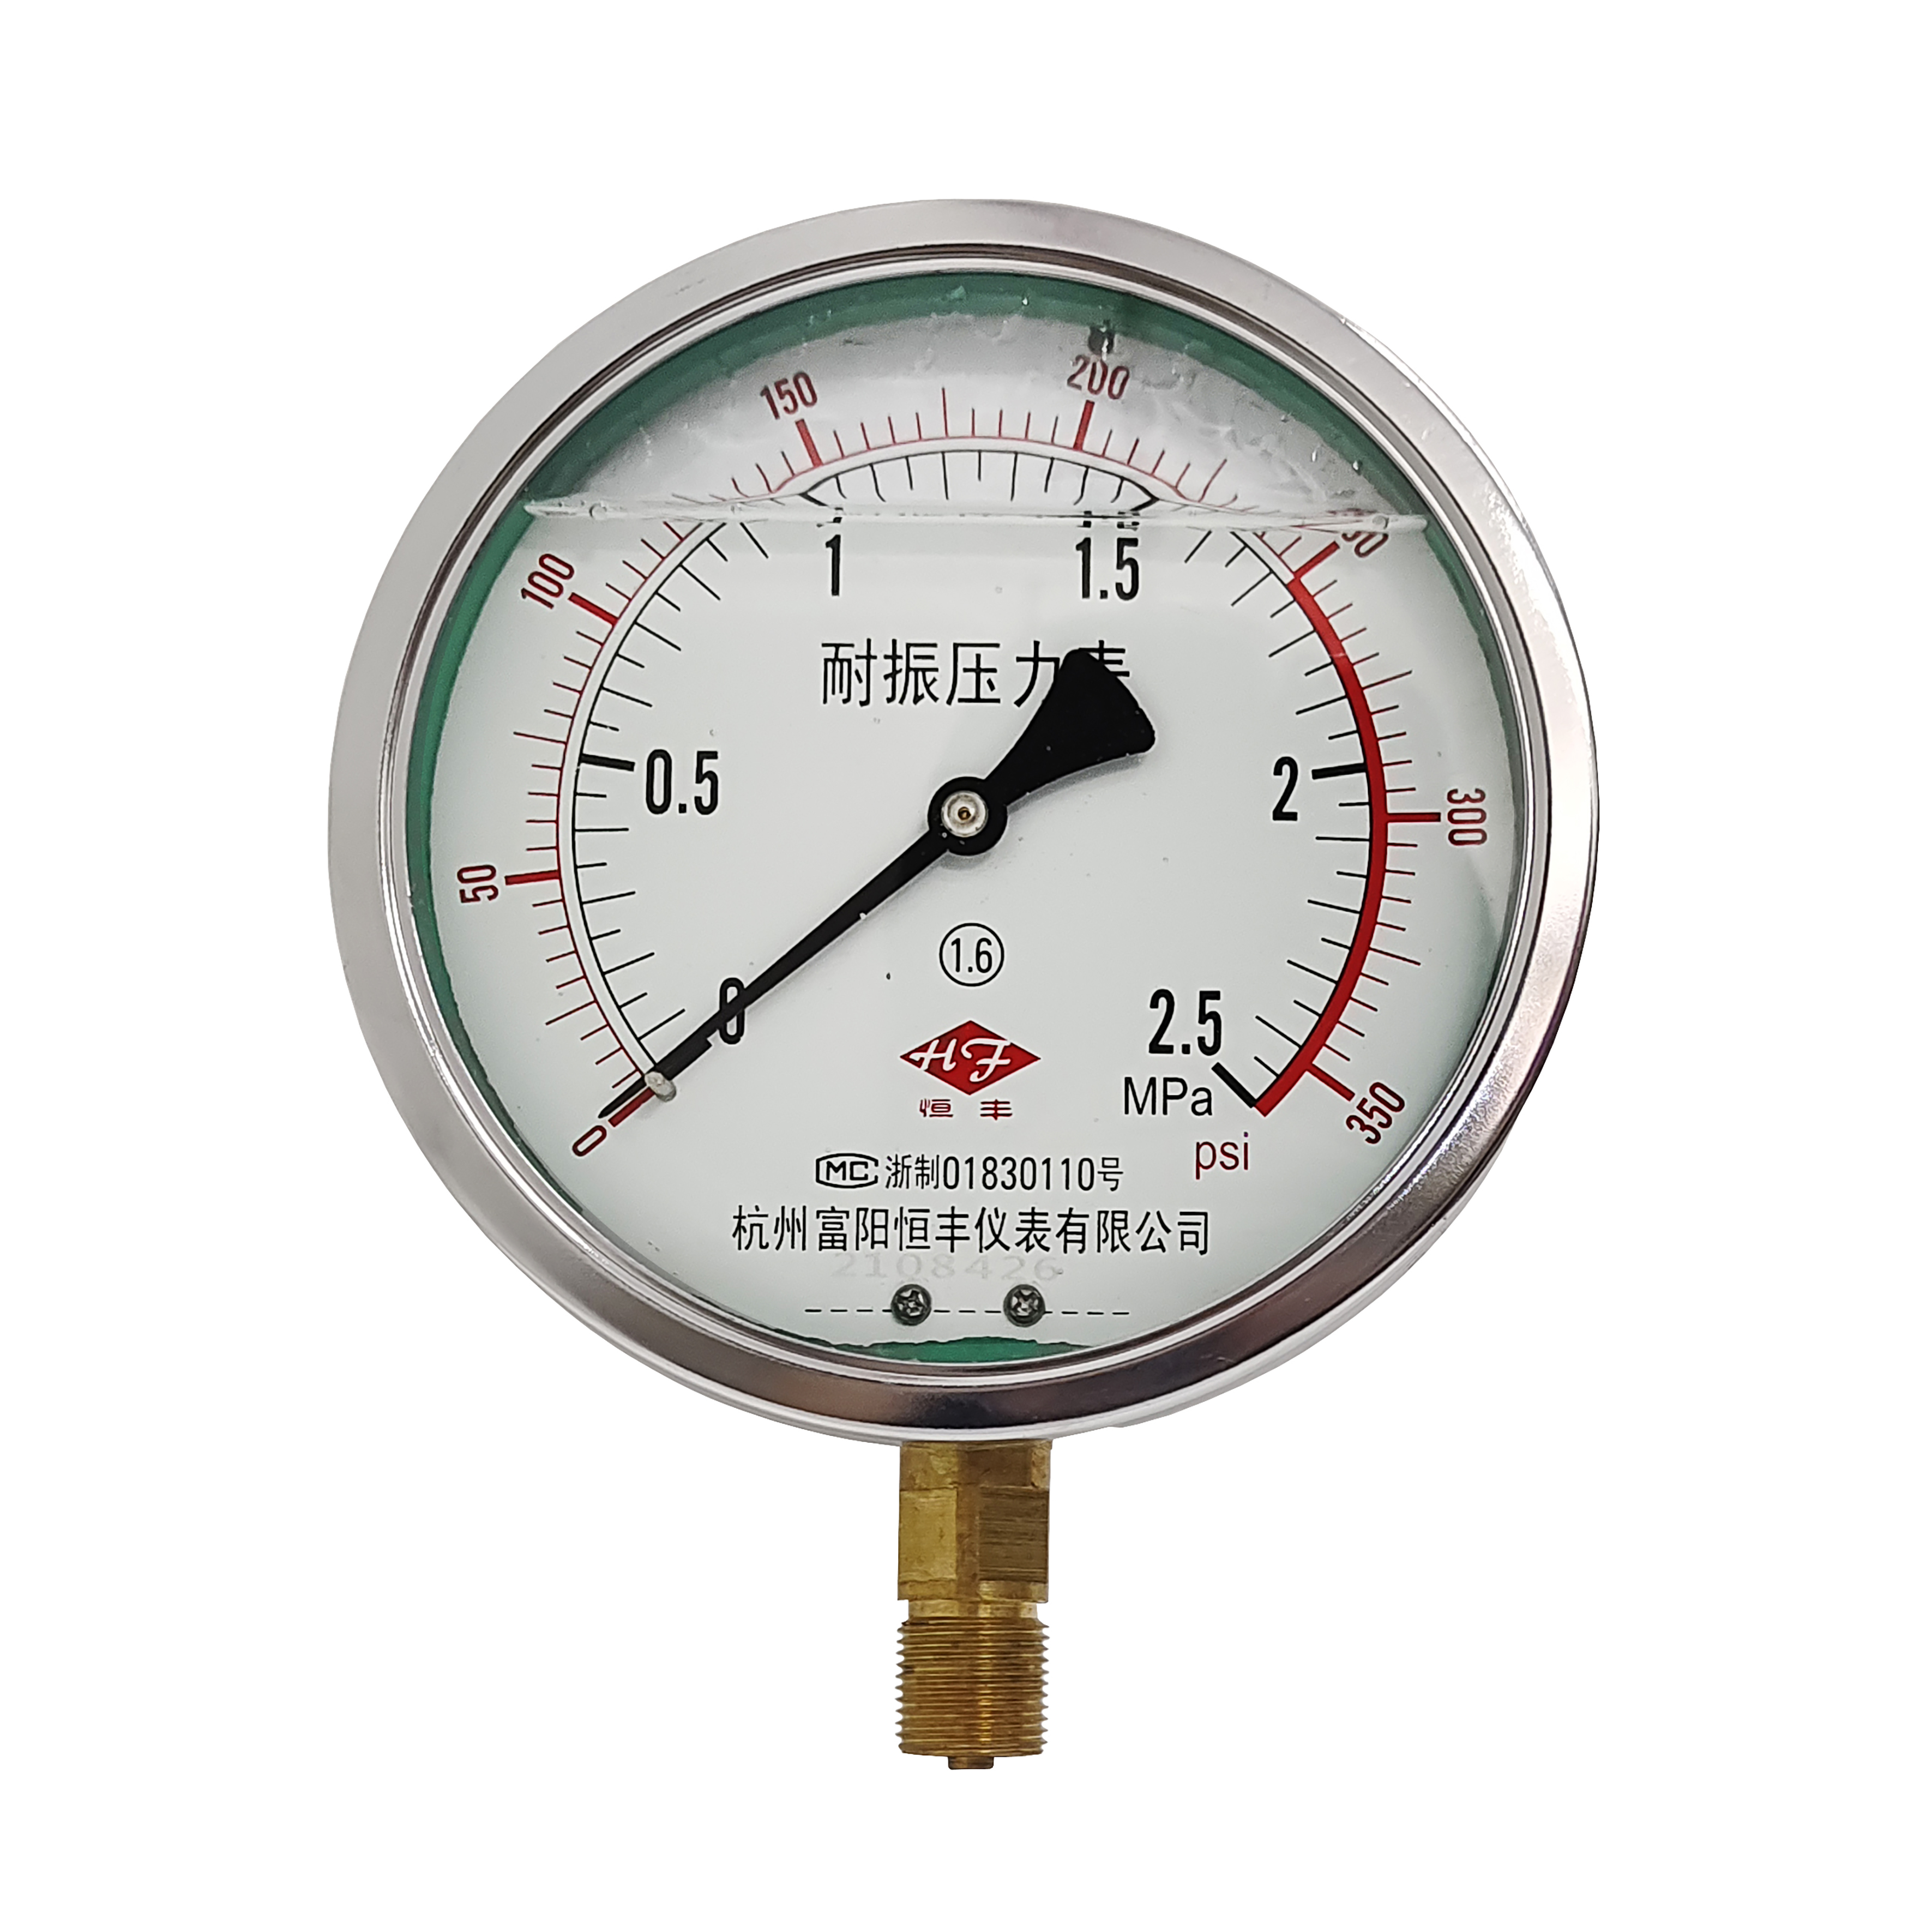 YN150 shock-proof pressure gauge